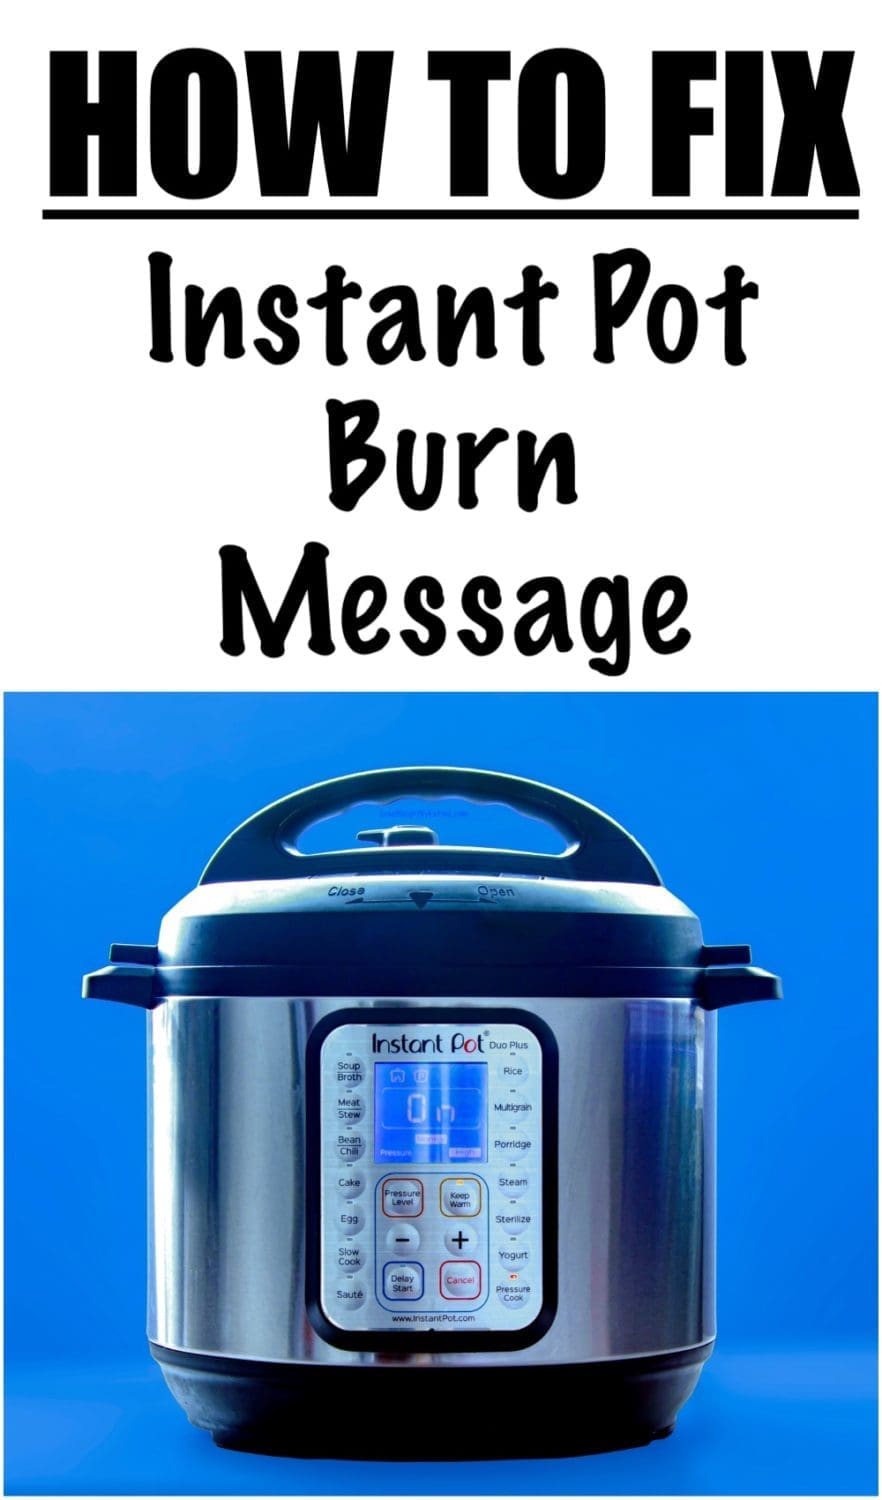 Instant Pot Burn Message